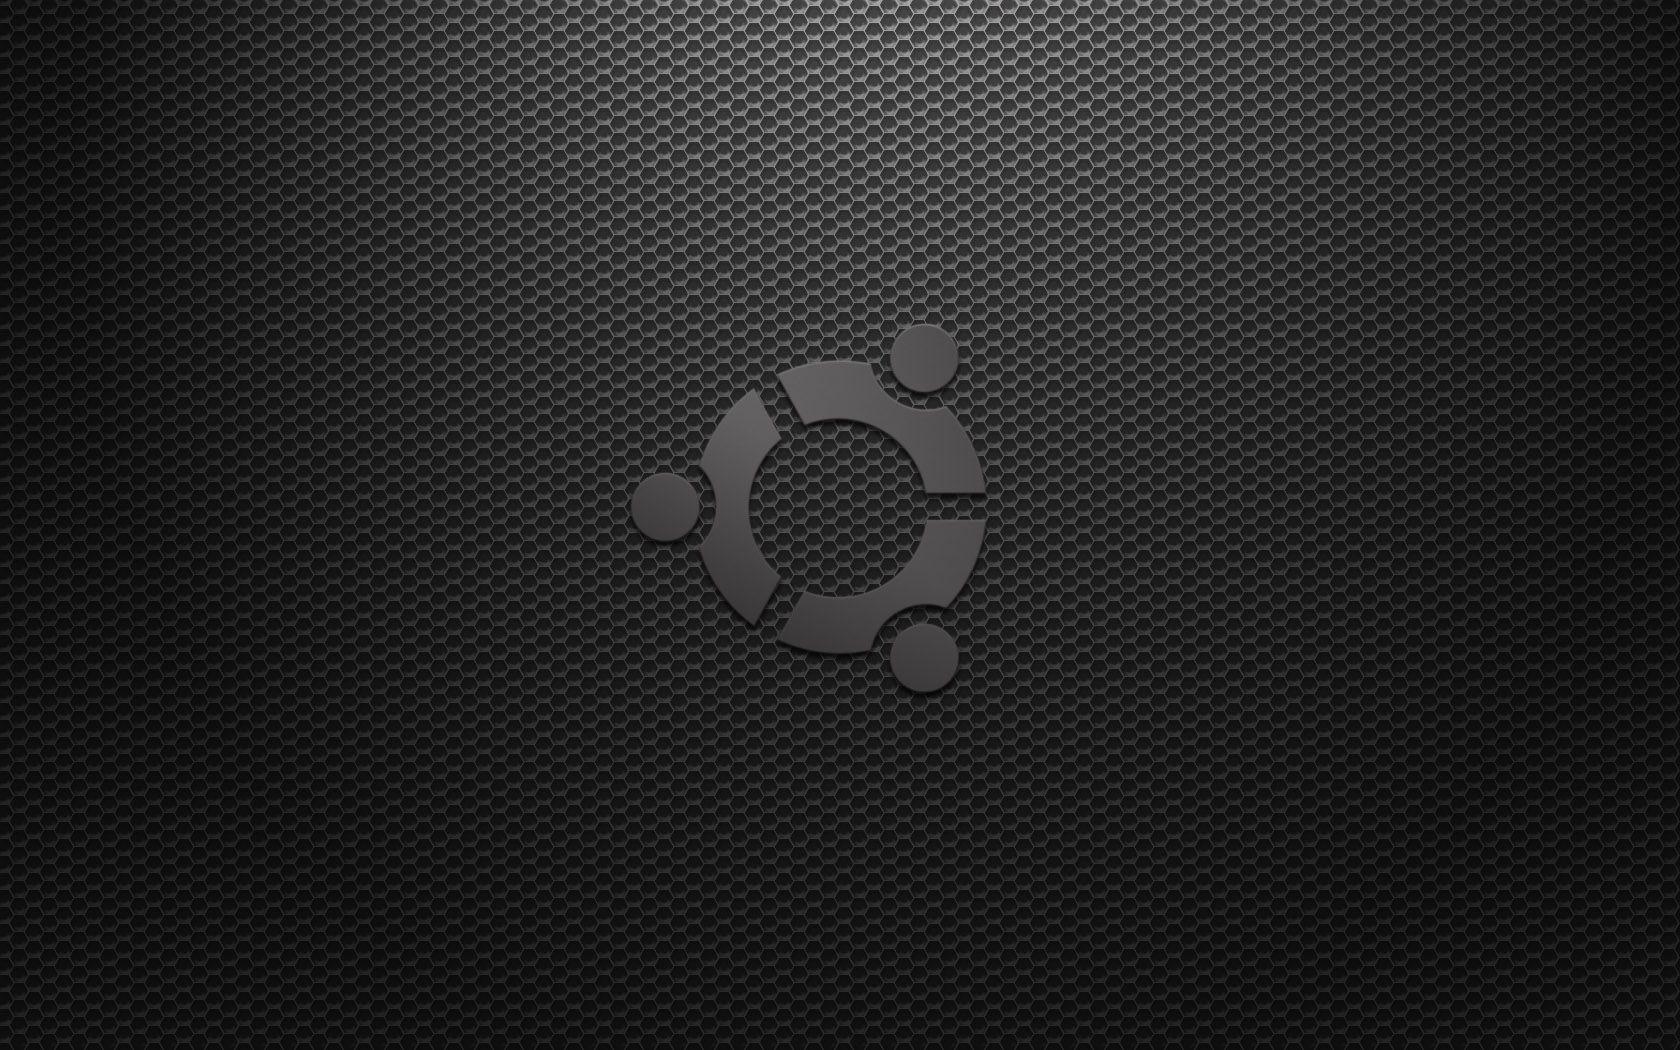 Dark Ubuntu Wallpaper 45423 1680x1050 px